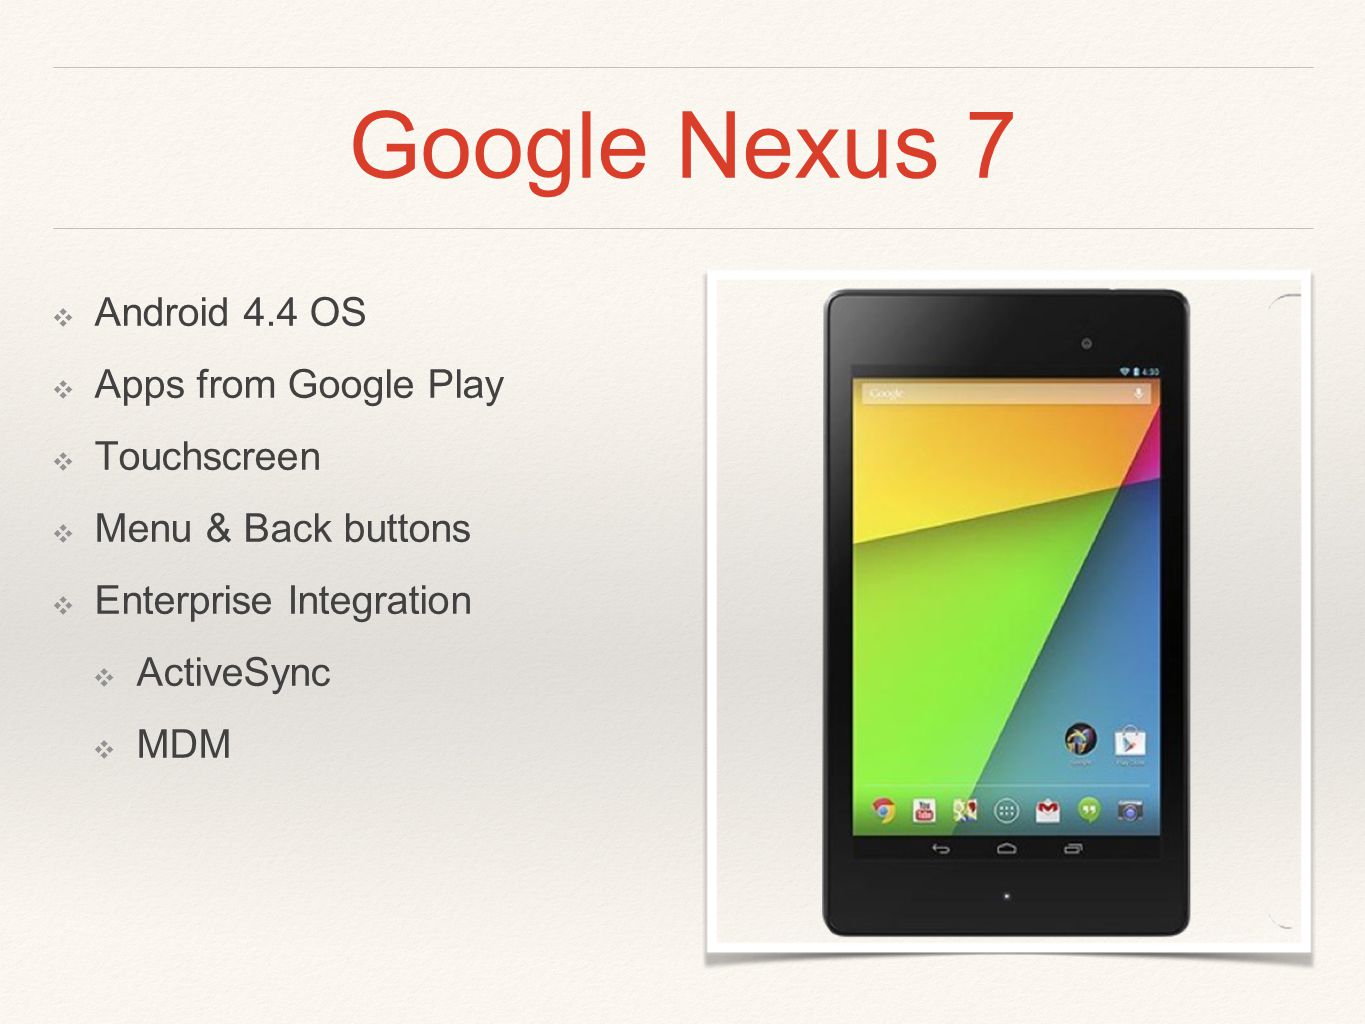 Google Nexus 7 ❖ Android 4.4 OS ❖ Apps from Google Play ❖ Touchscreen ❖ Menu & Back buttons ❖ Enterprise Integration ❖ ActiveSync ❖ MDM